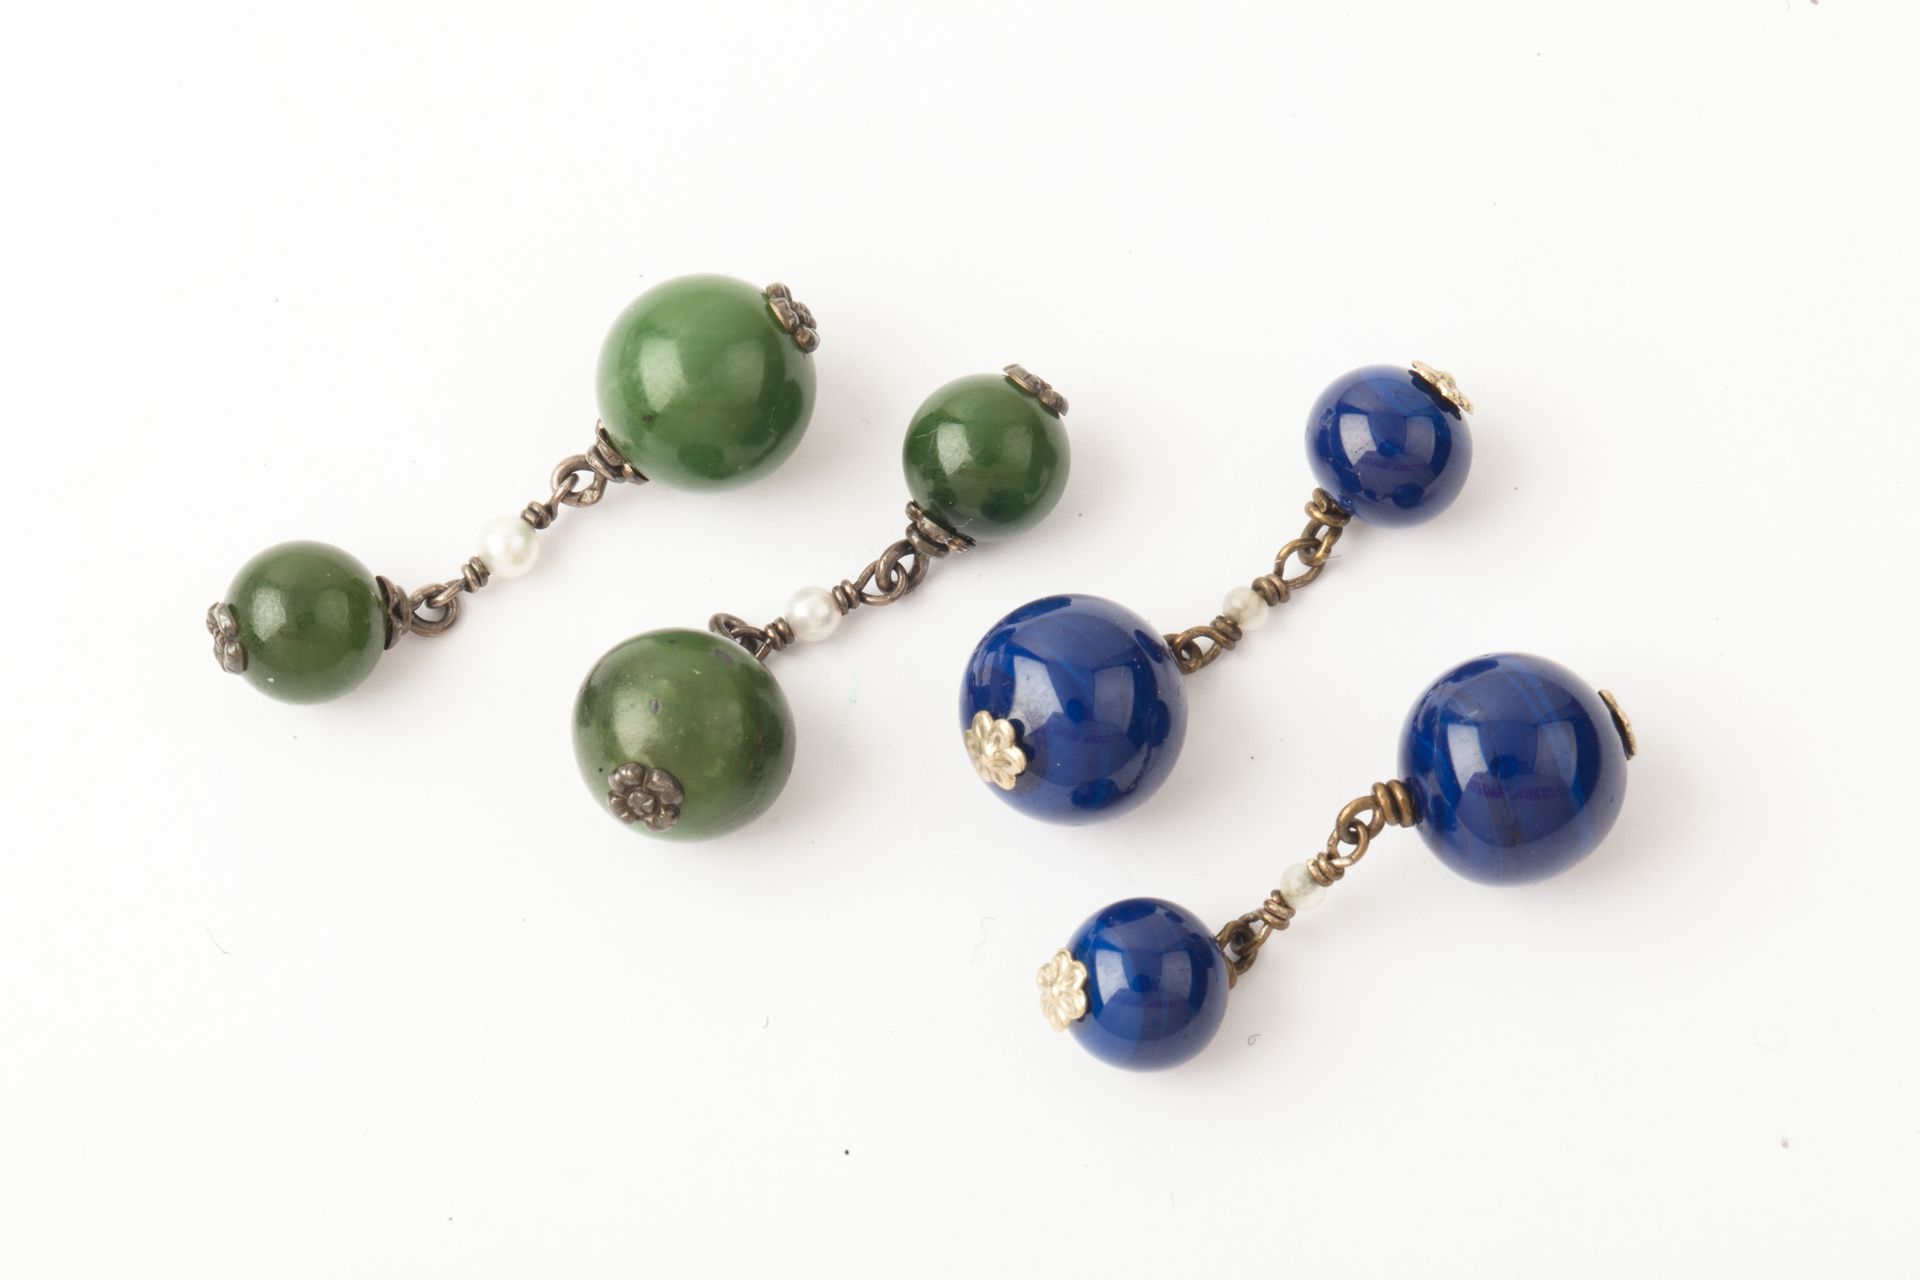 Null 本拍品由两对金属袖扣组成；其中一对用砂金石和种子珠装饰，另一对用蓝色珠子装饰。